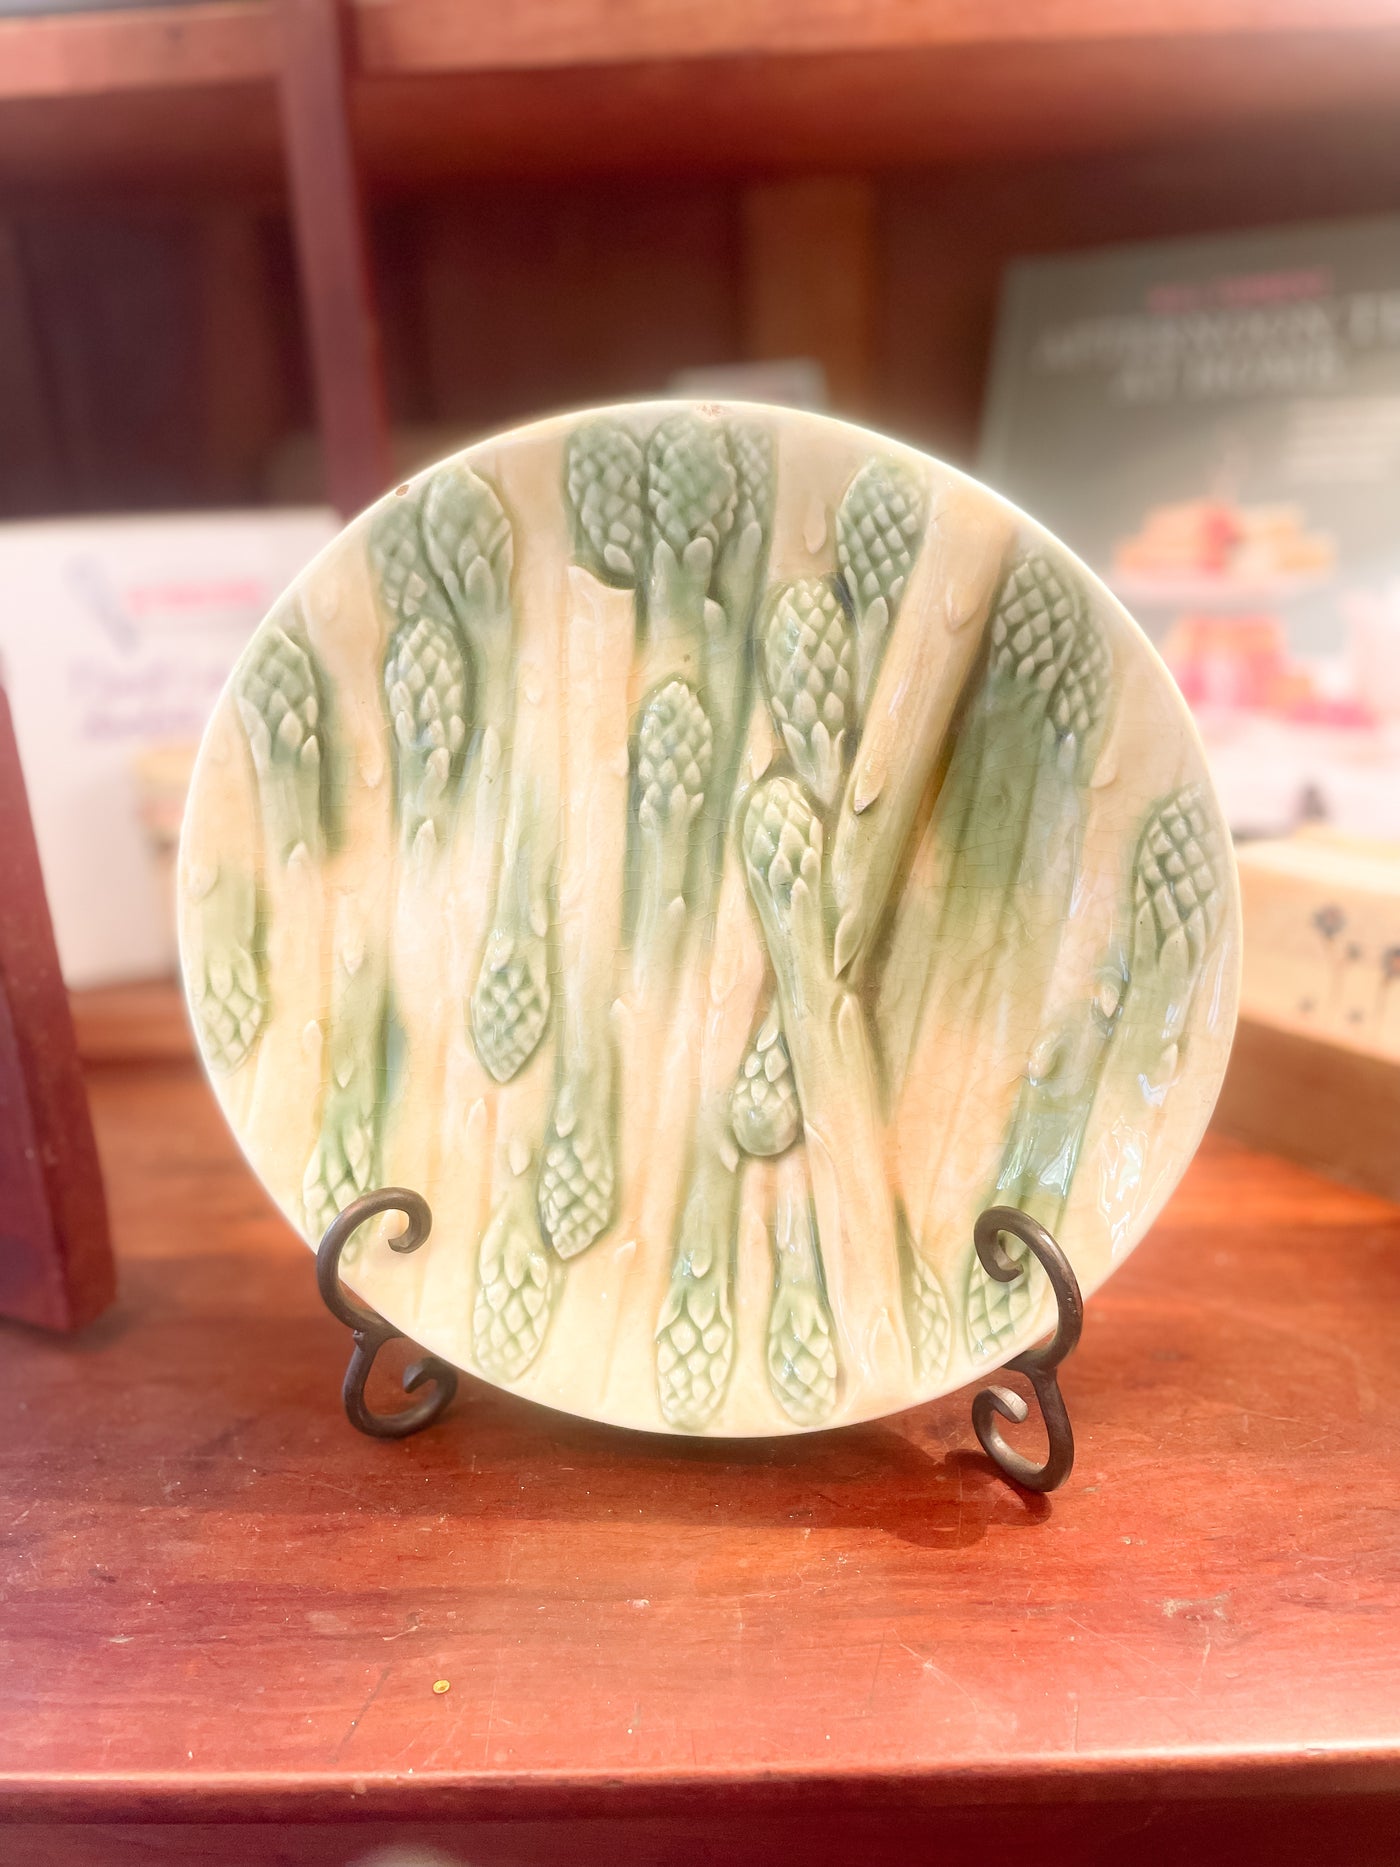 Antique Majolica Plate with Asparagus